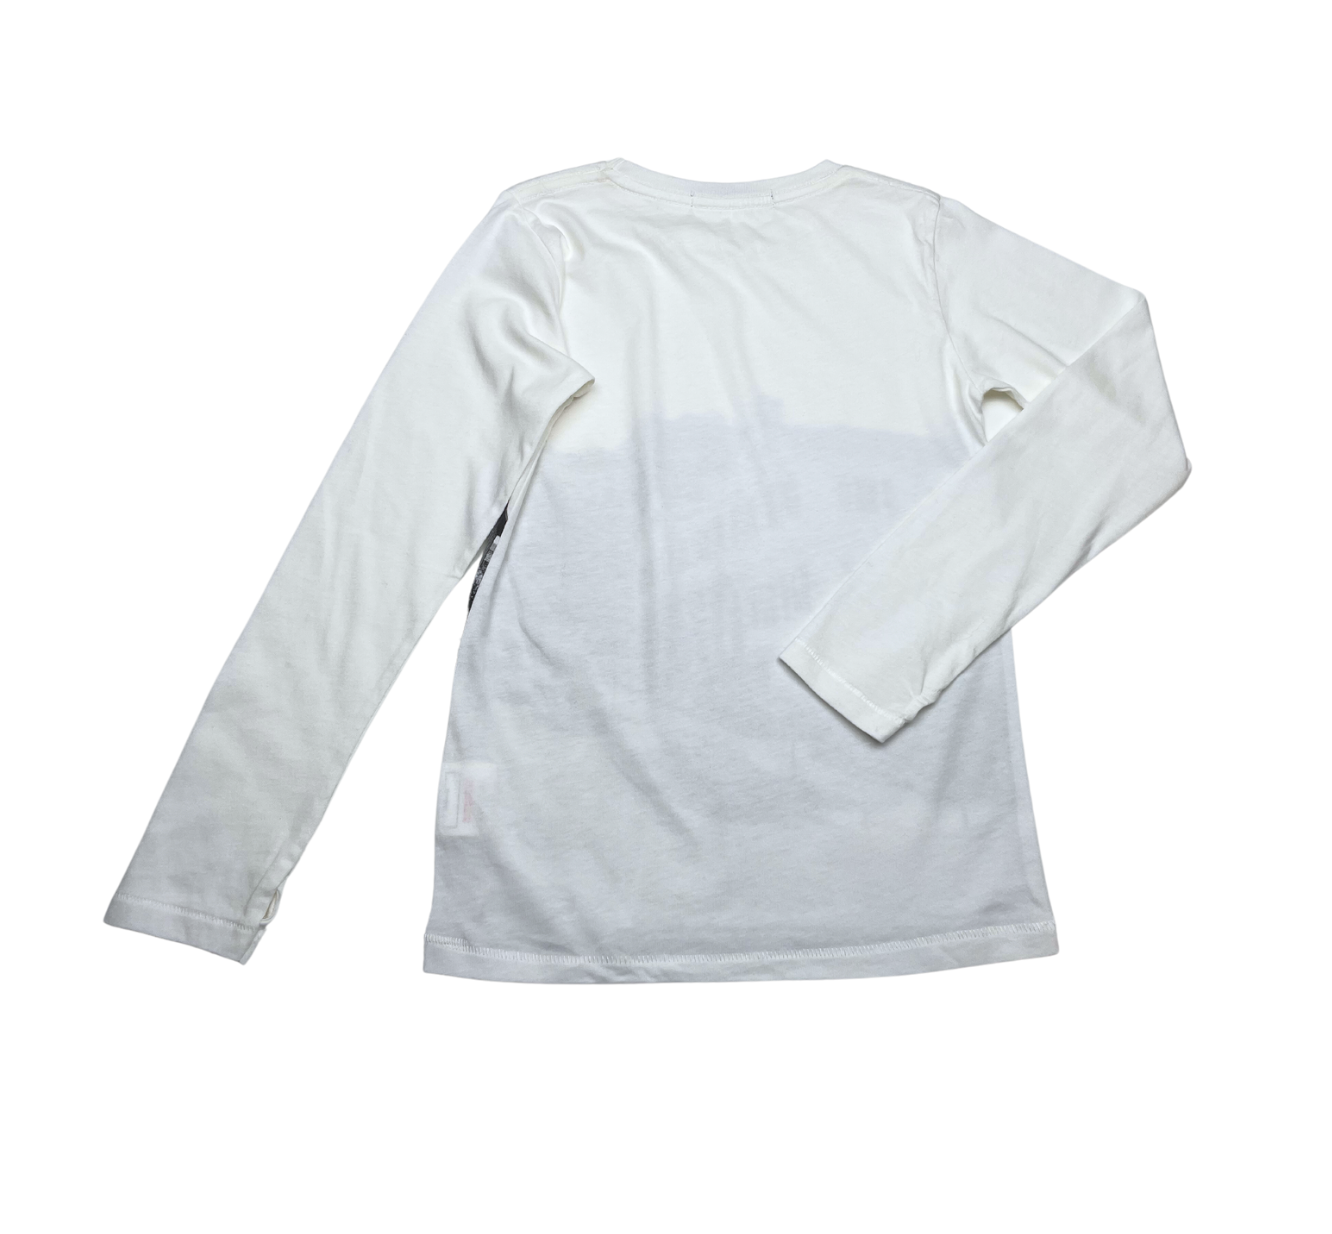 FINGER IN THE NOSE - T-shirt blanc avec dessin rue - 8/9 ans